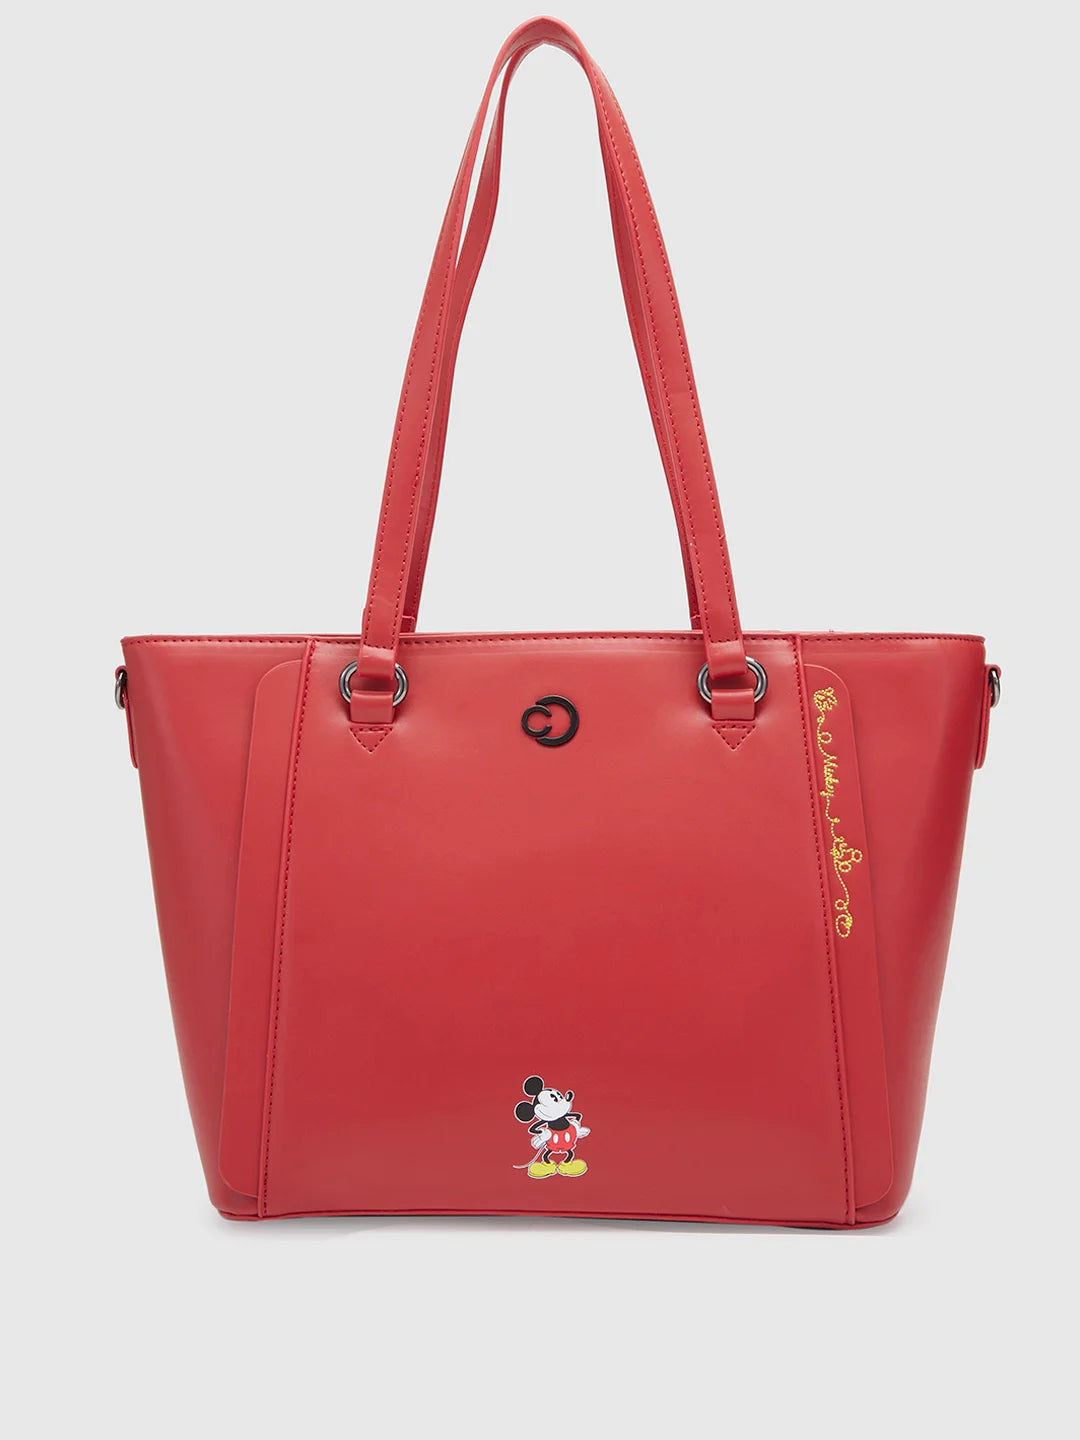 Caprese Disney Inspired Printed Mickey Mouse Collection Tote Medium Handbag